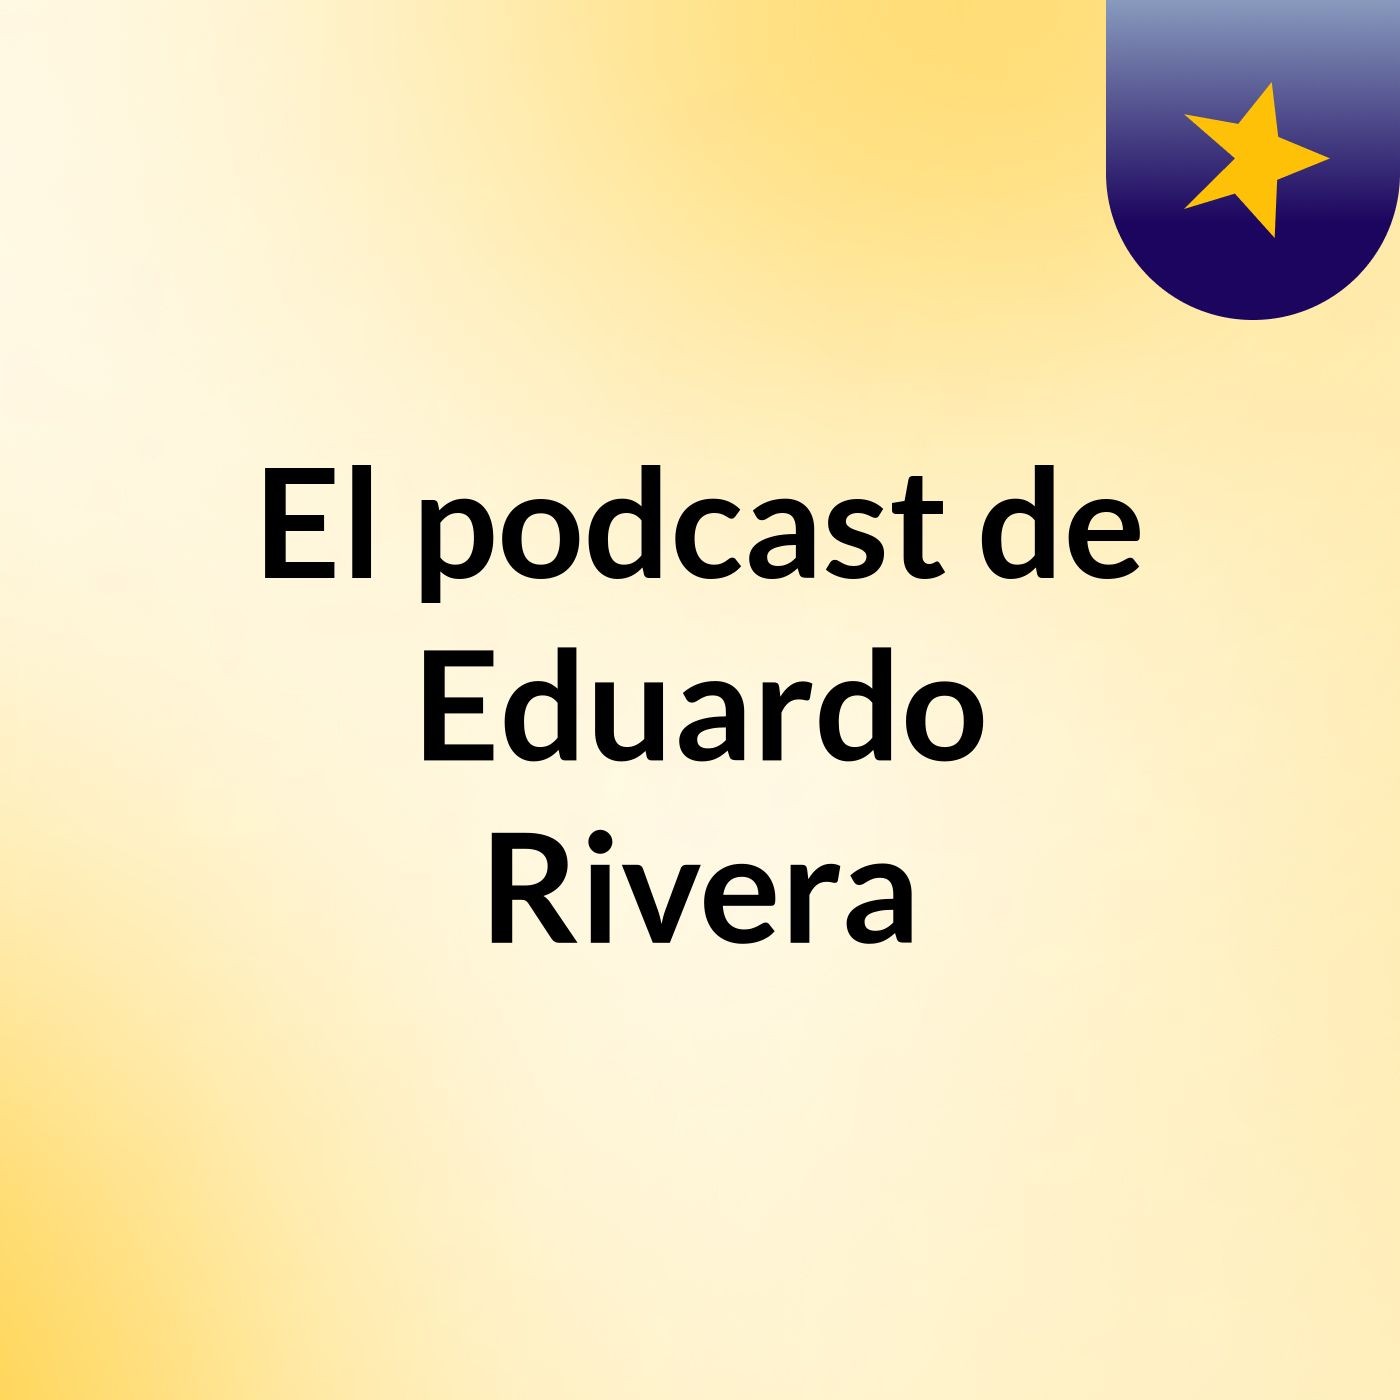 El podcast de Eduardo Rivera